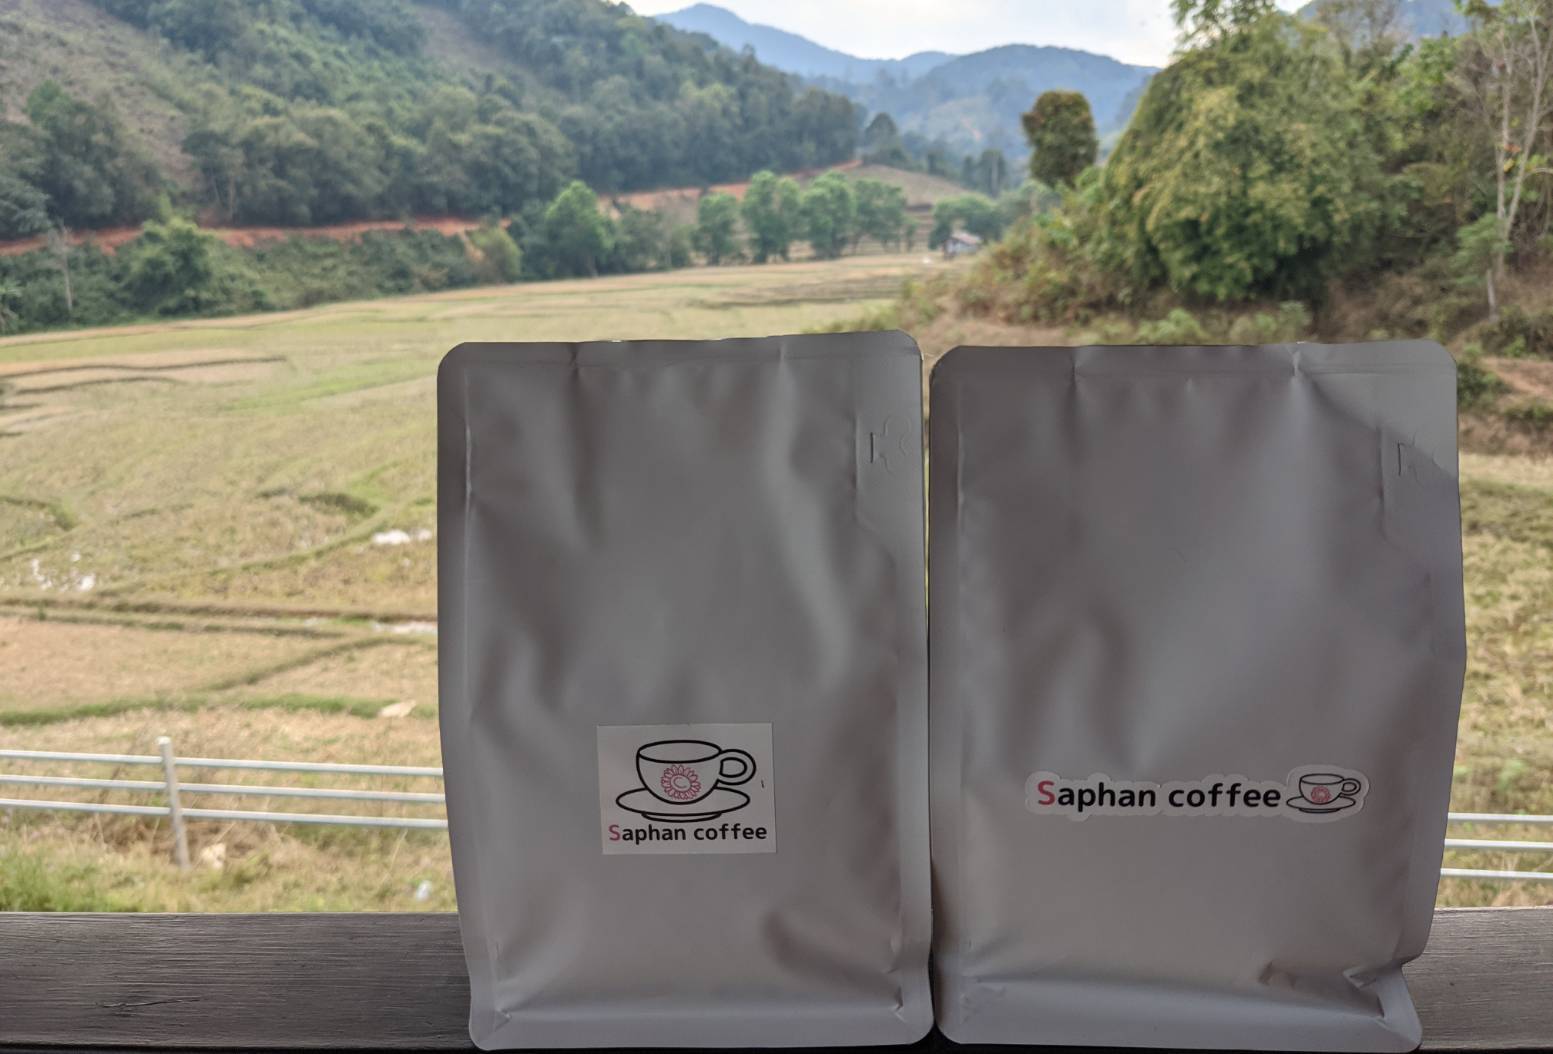 Saphan coffee